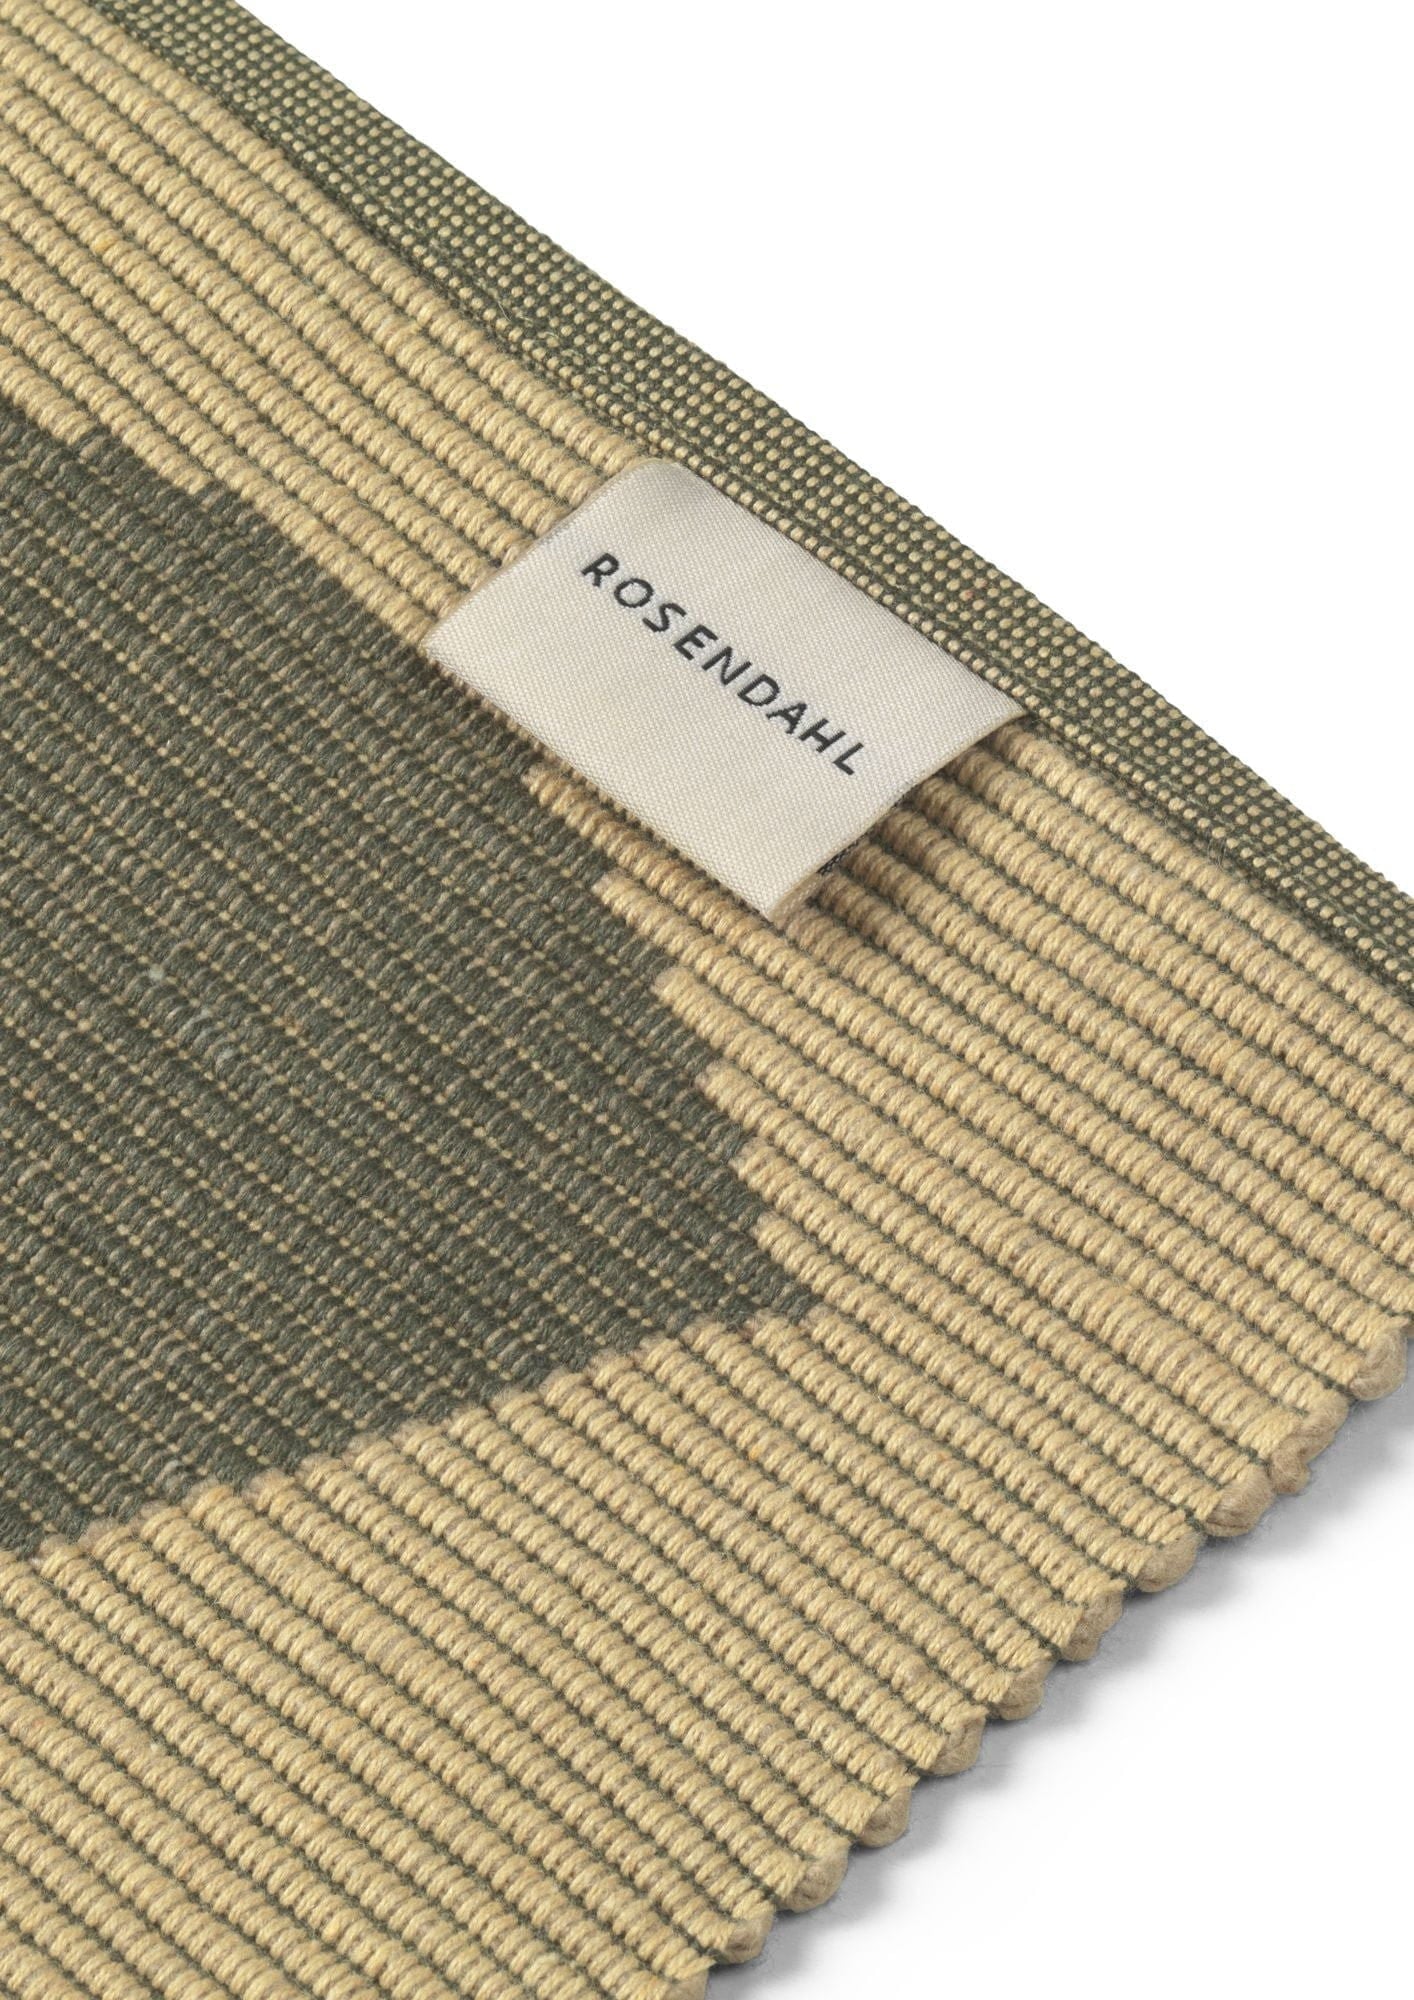 Rosendahl Rosendahl Textiles Outdoor Natura 43x30 cm, zielony